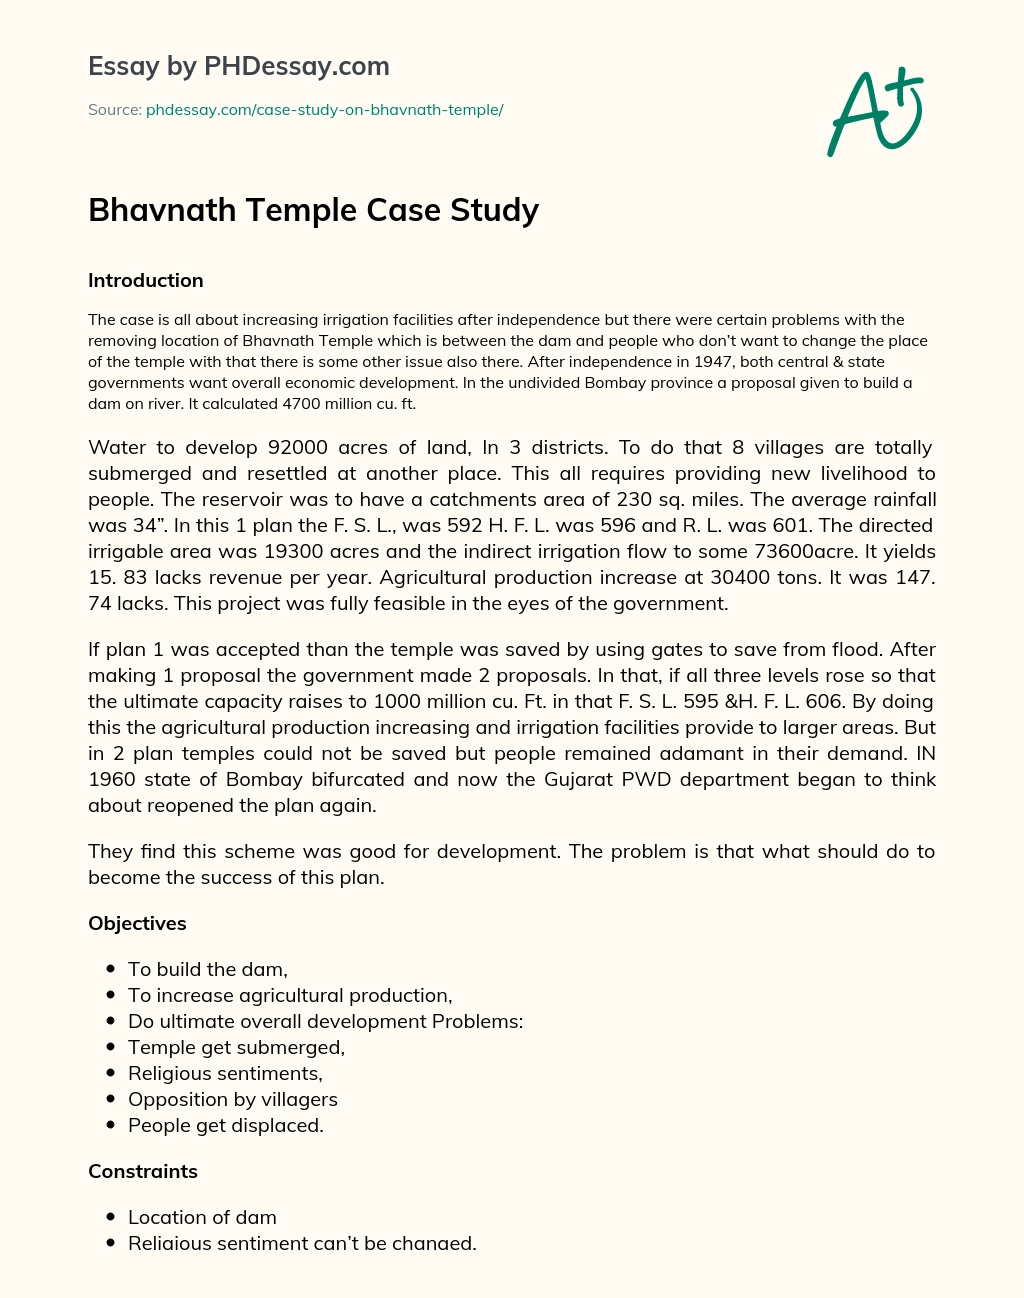 Bhavnath Temple Case Study essay